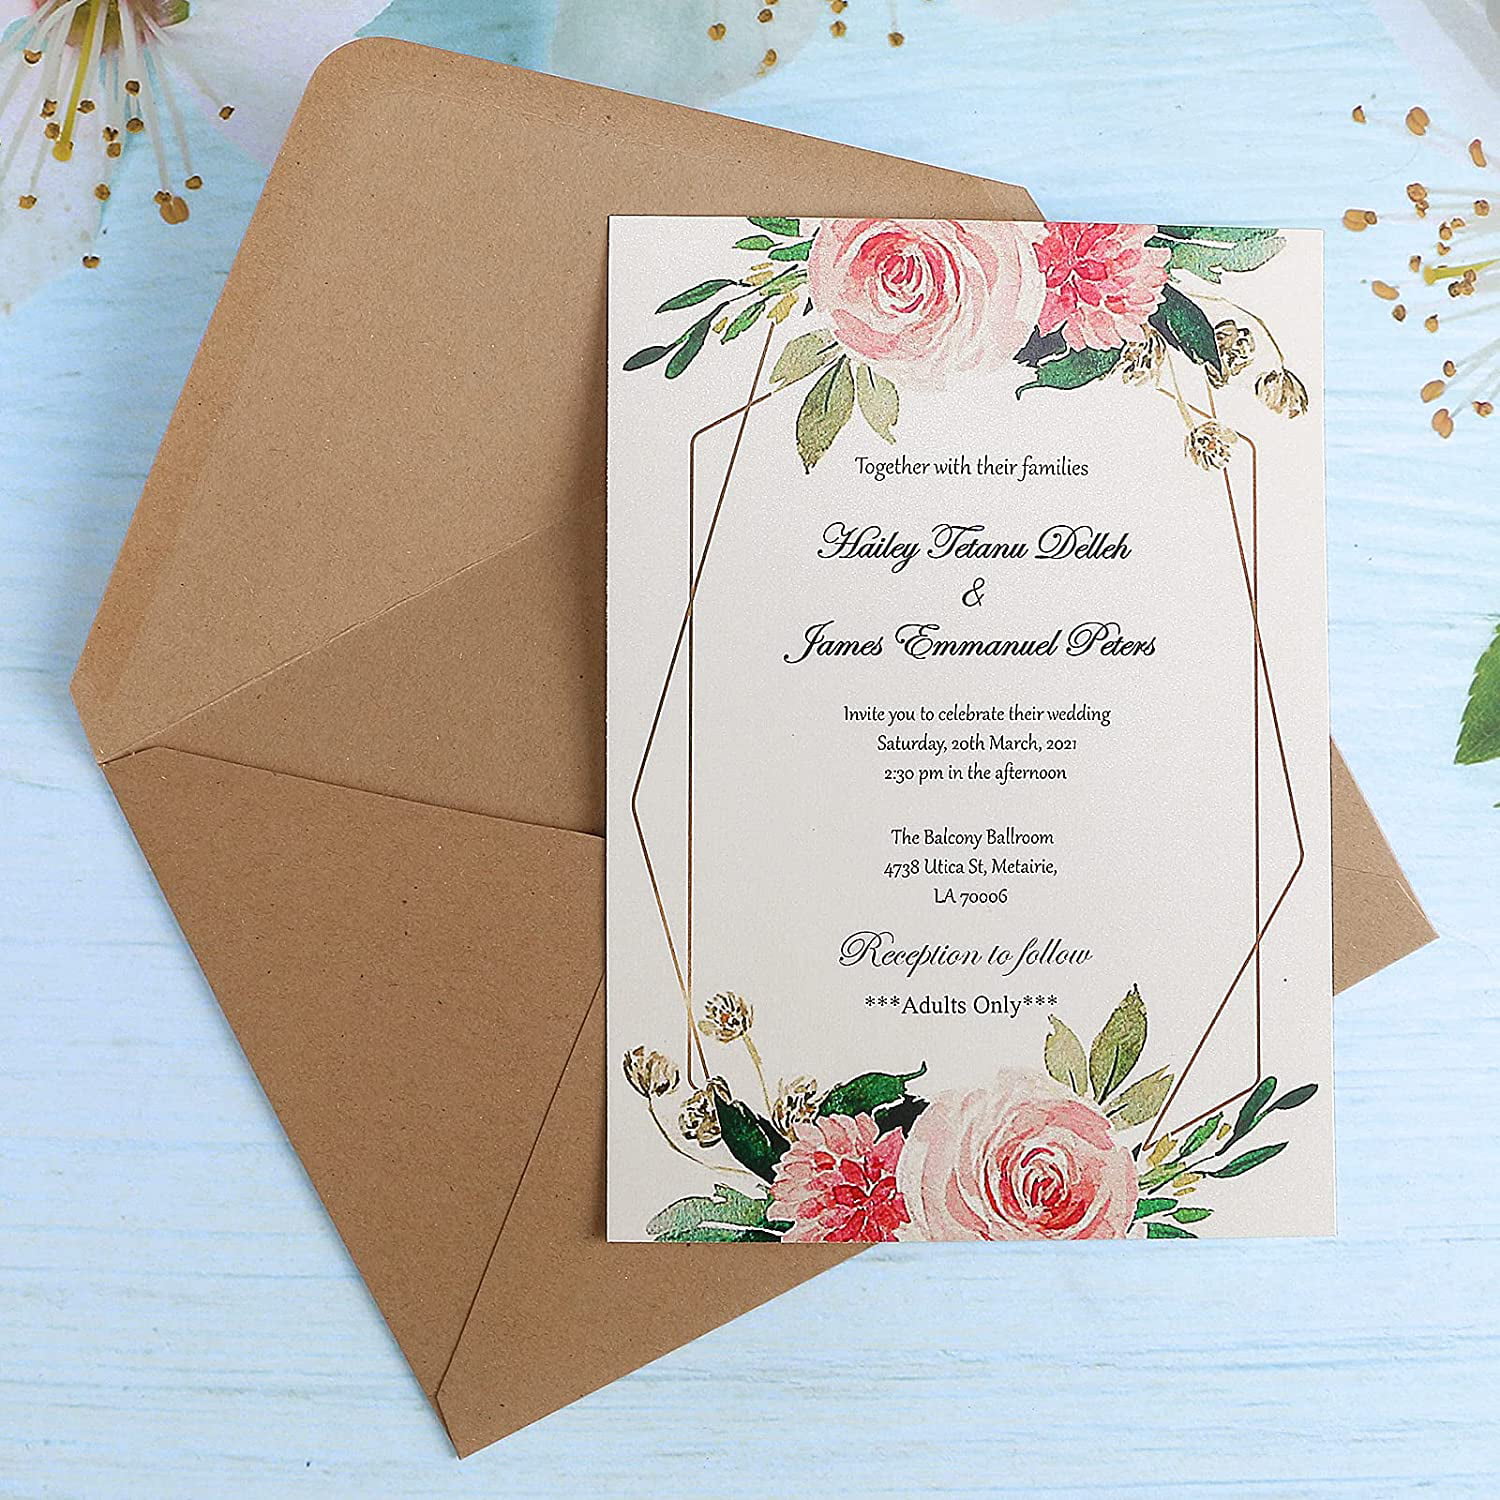 Kathmandu Valley Co. 5x7 inch Handmade Lokta Paper Envelopes for Wedding Invitations, Announcements, Vintage Envelopes with Pressed Marigold Flower